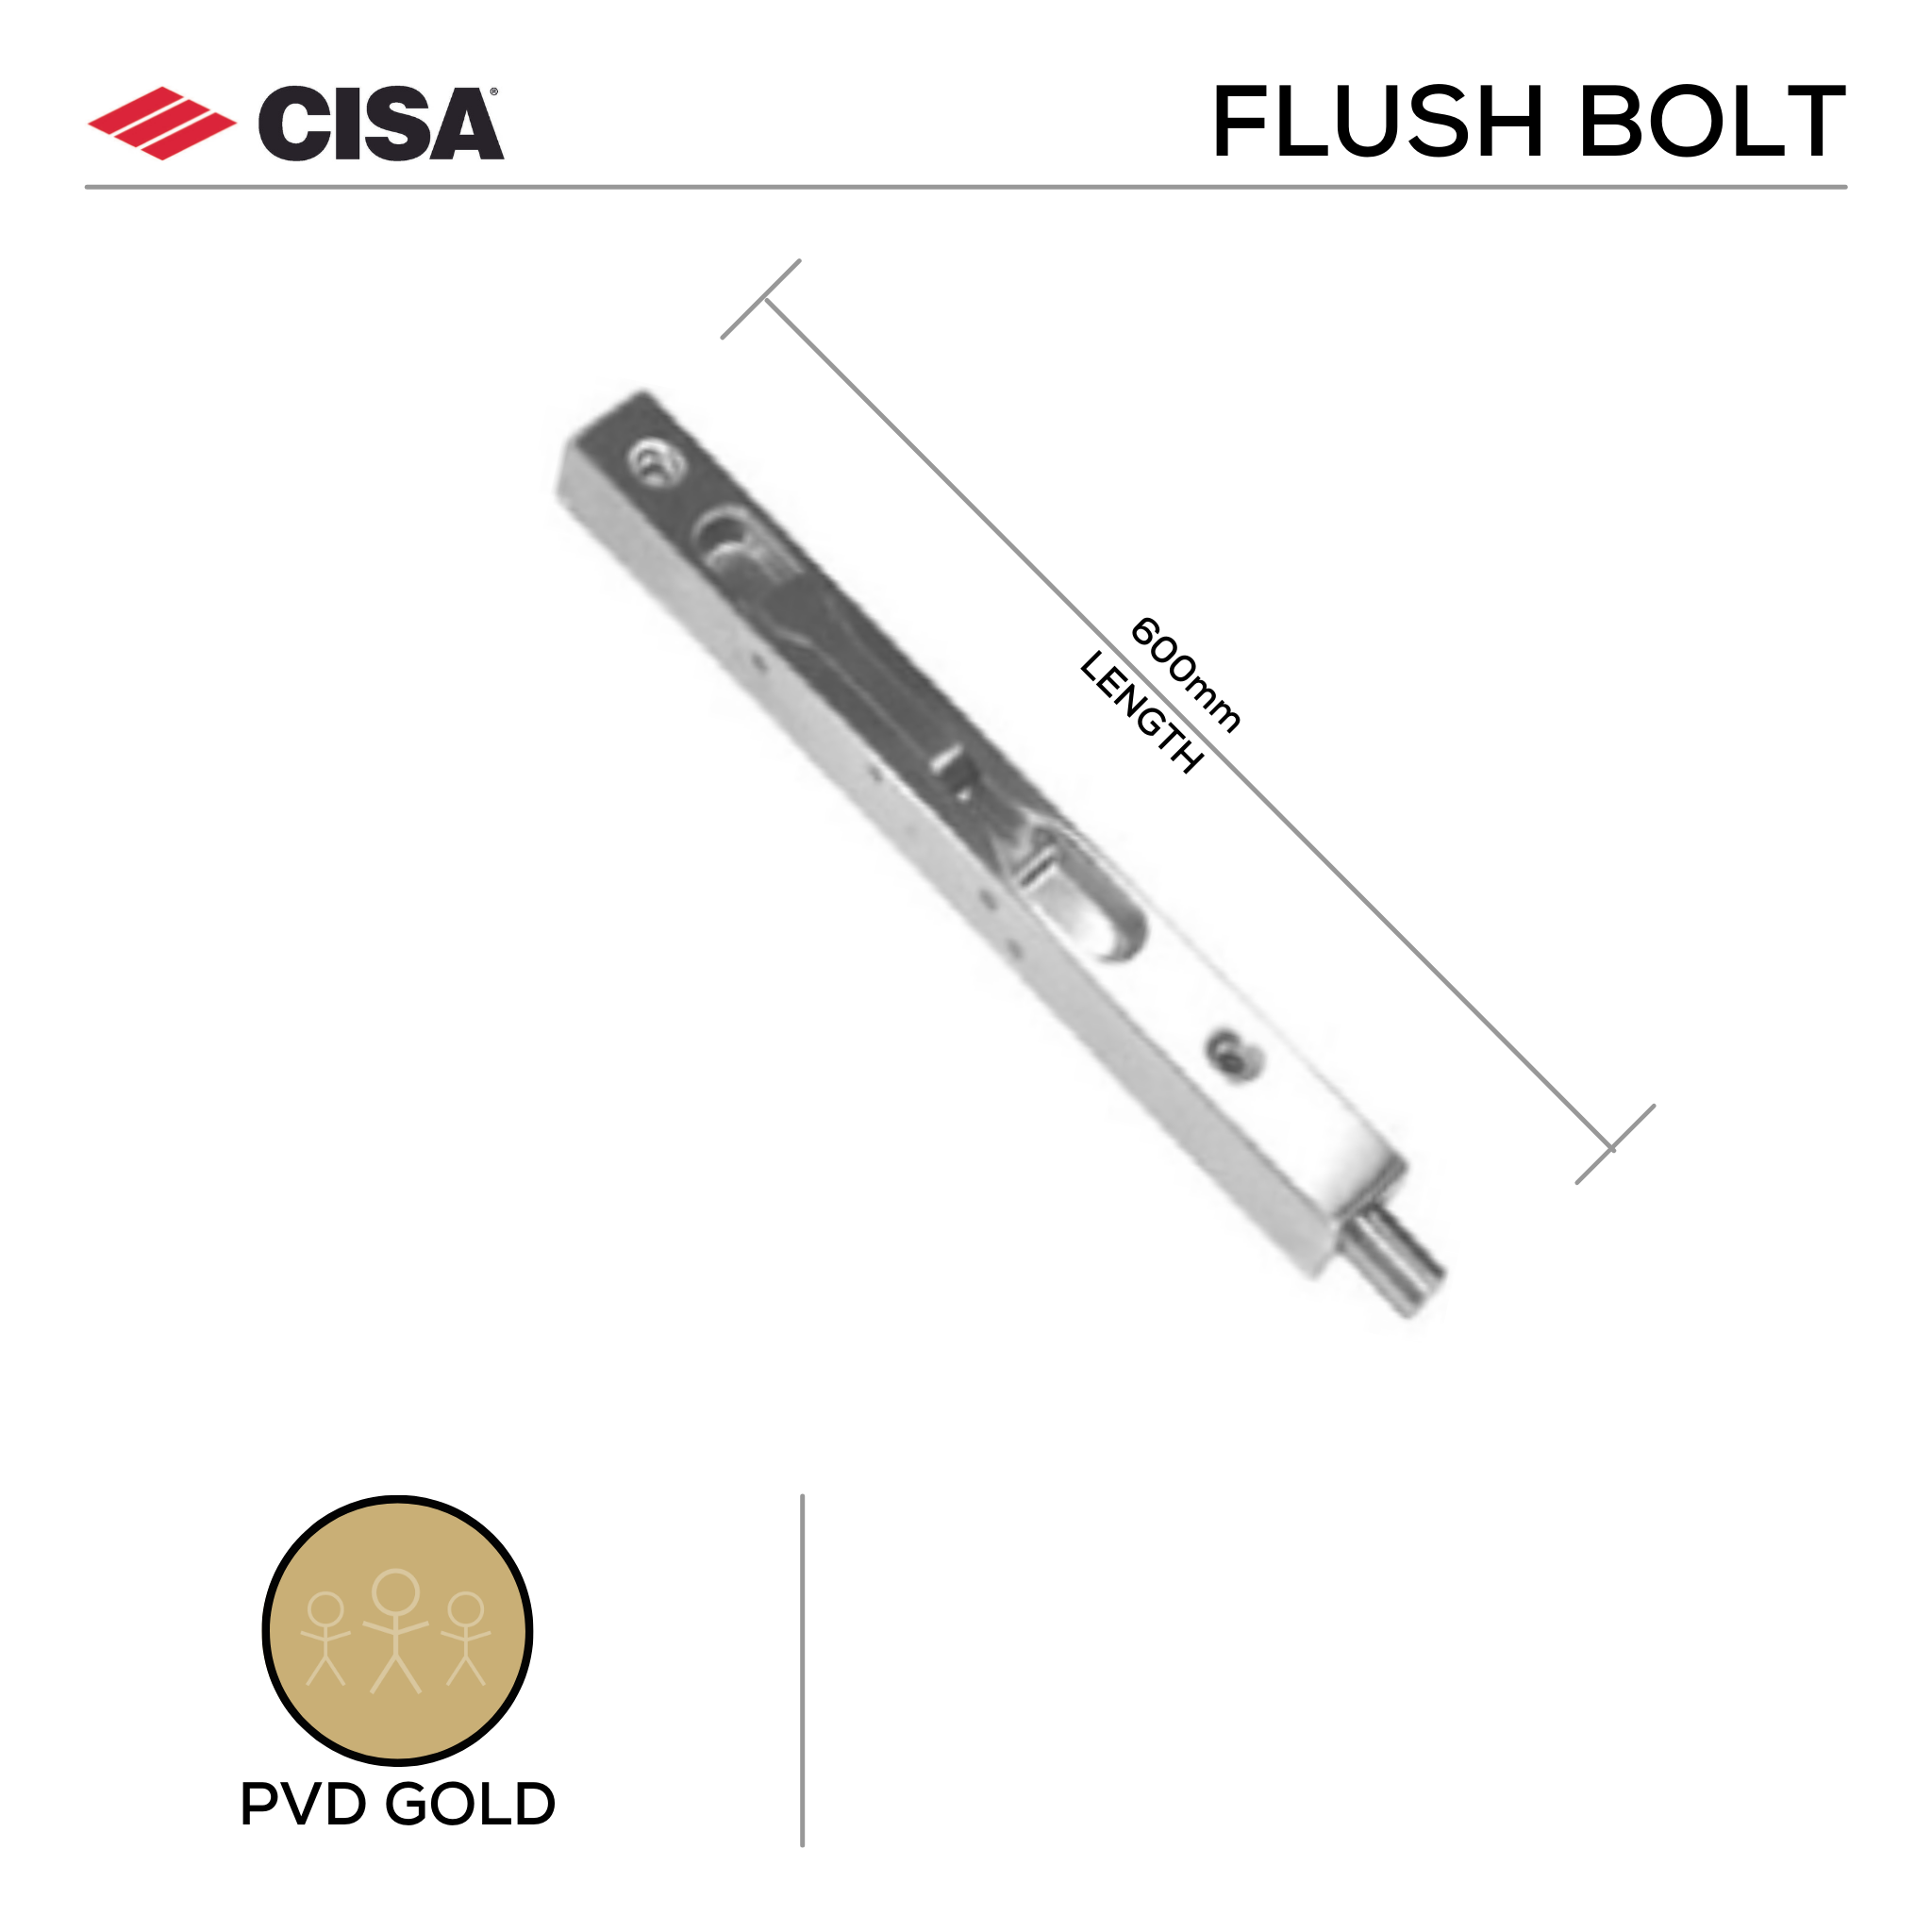 FBB600.GD, Flush Bolt, Box Type, 600mm (l) x 19mm (w), Gold PVD, CISA